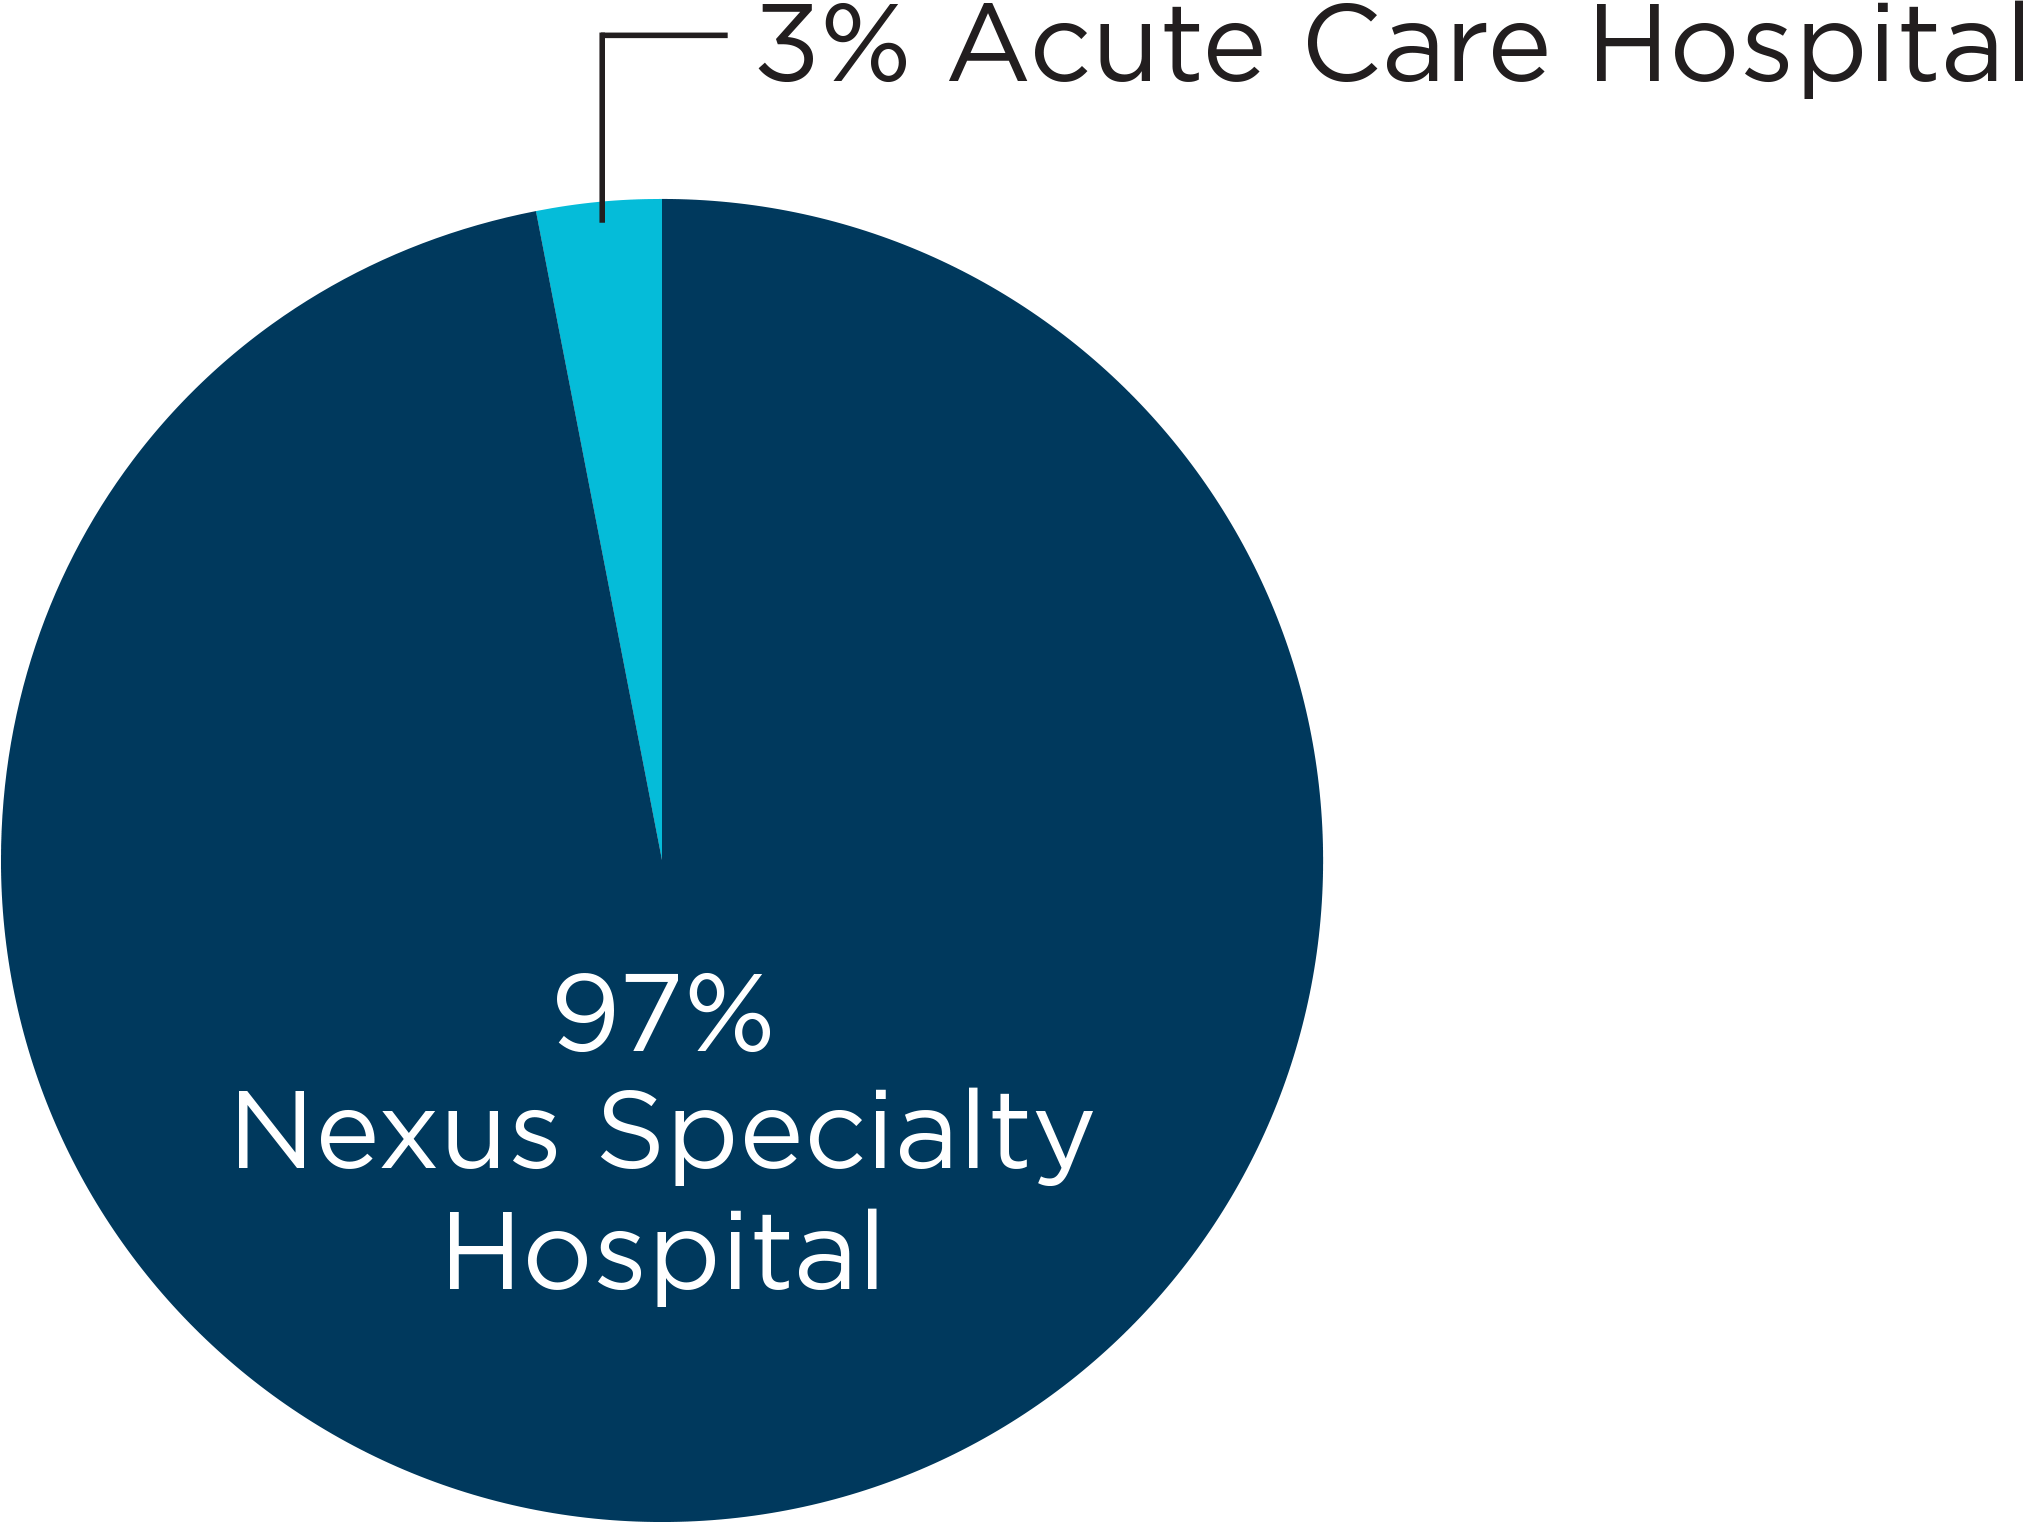 97% Nexus Specialty Hospital - 3% Acute Care Hospital